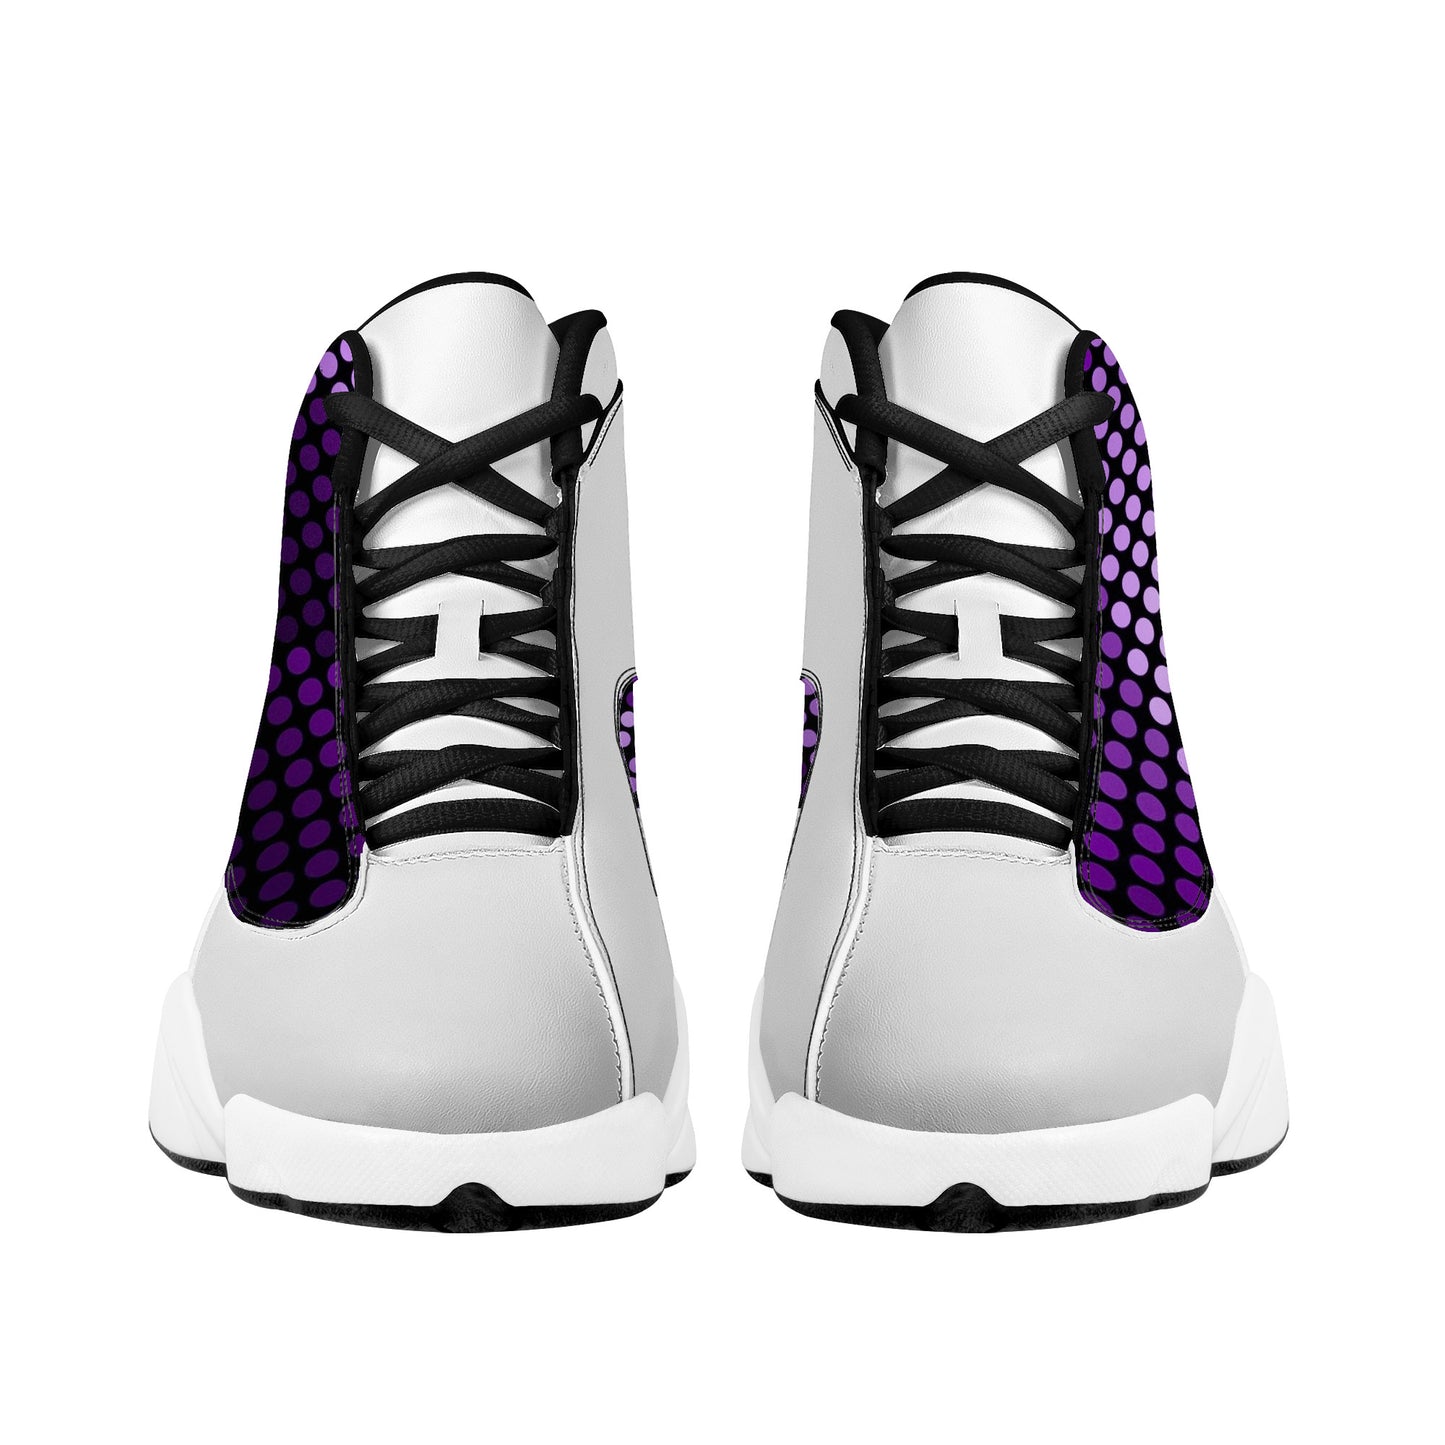 Basketball Shoes - Purple